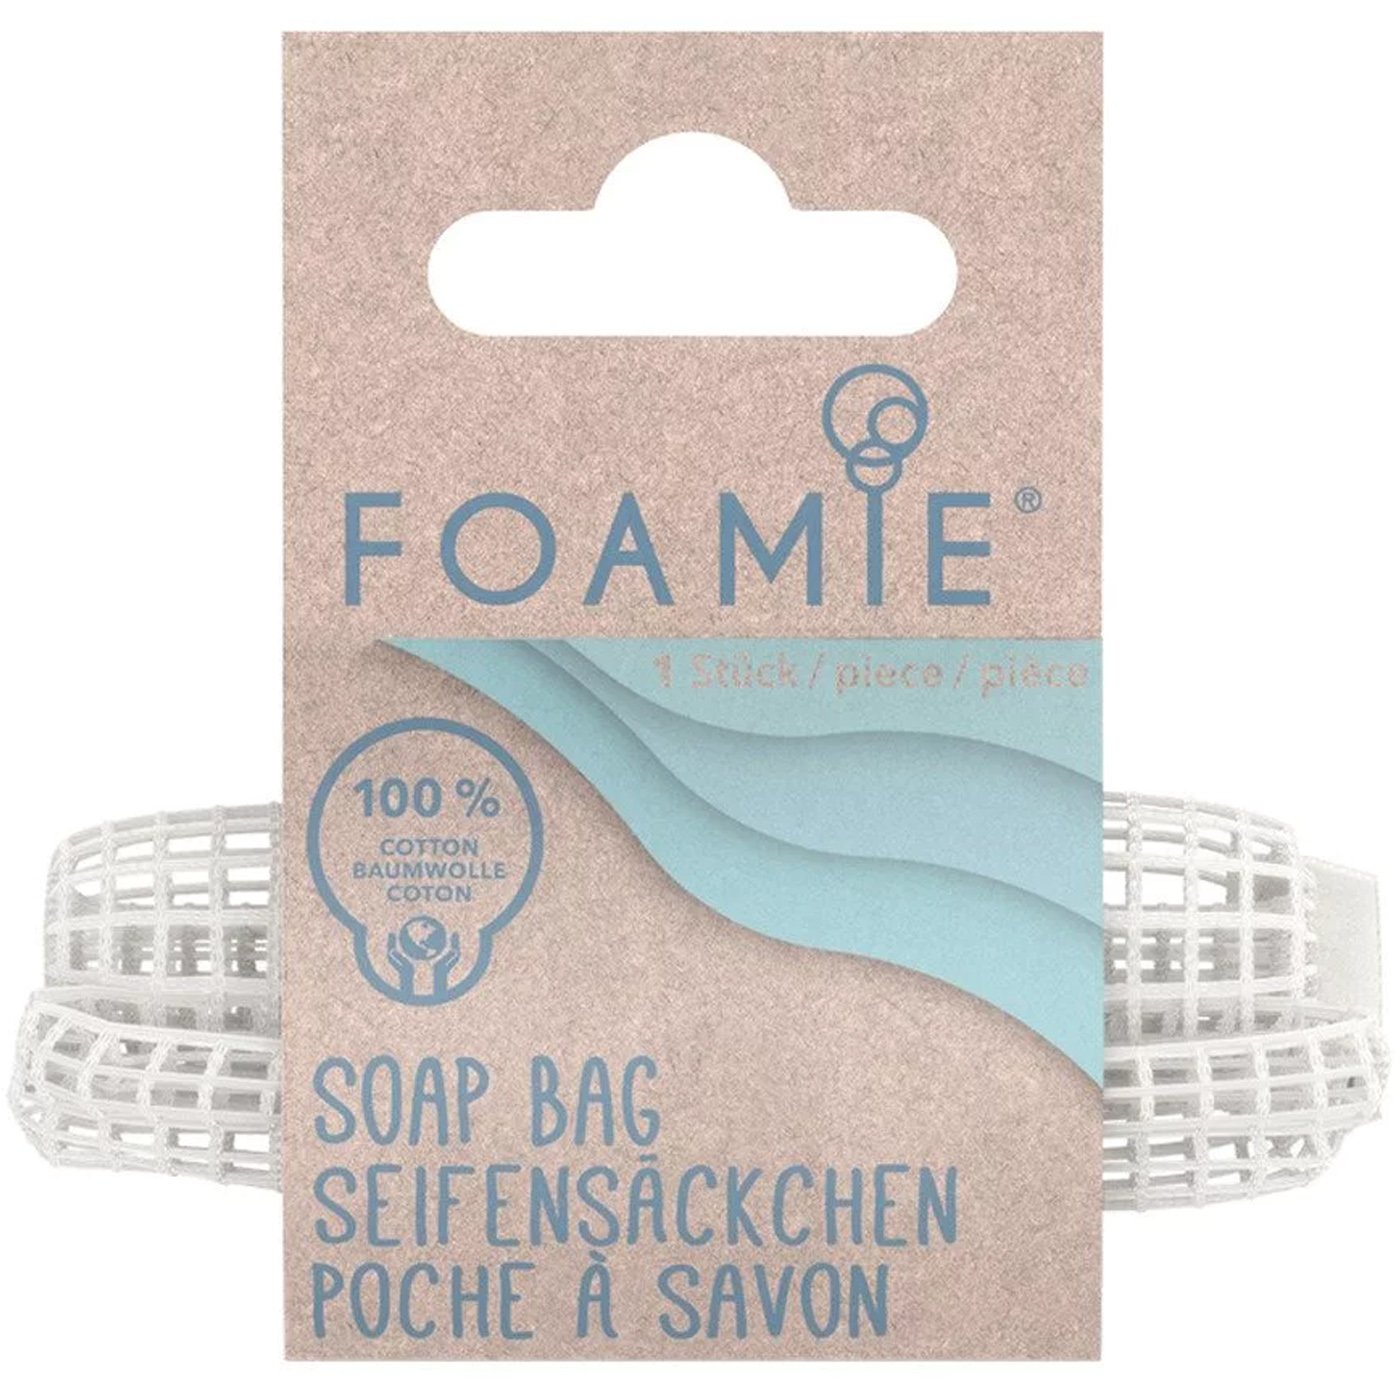 Foamie Soap Bar Bag Διχτάκι Αποθήκευσης Μπάρας Σαπουνιού 1 Τεμάχιο